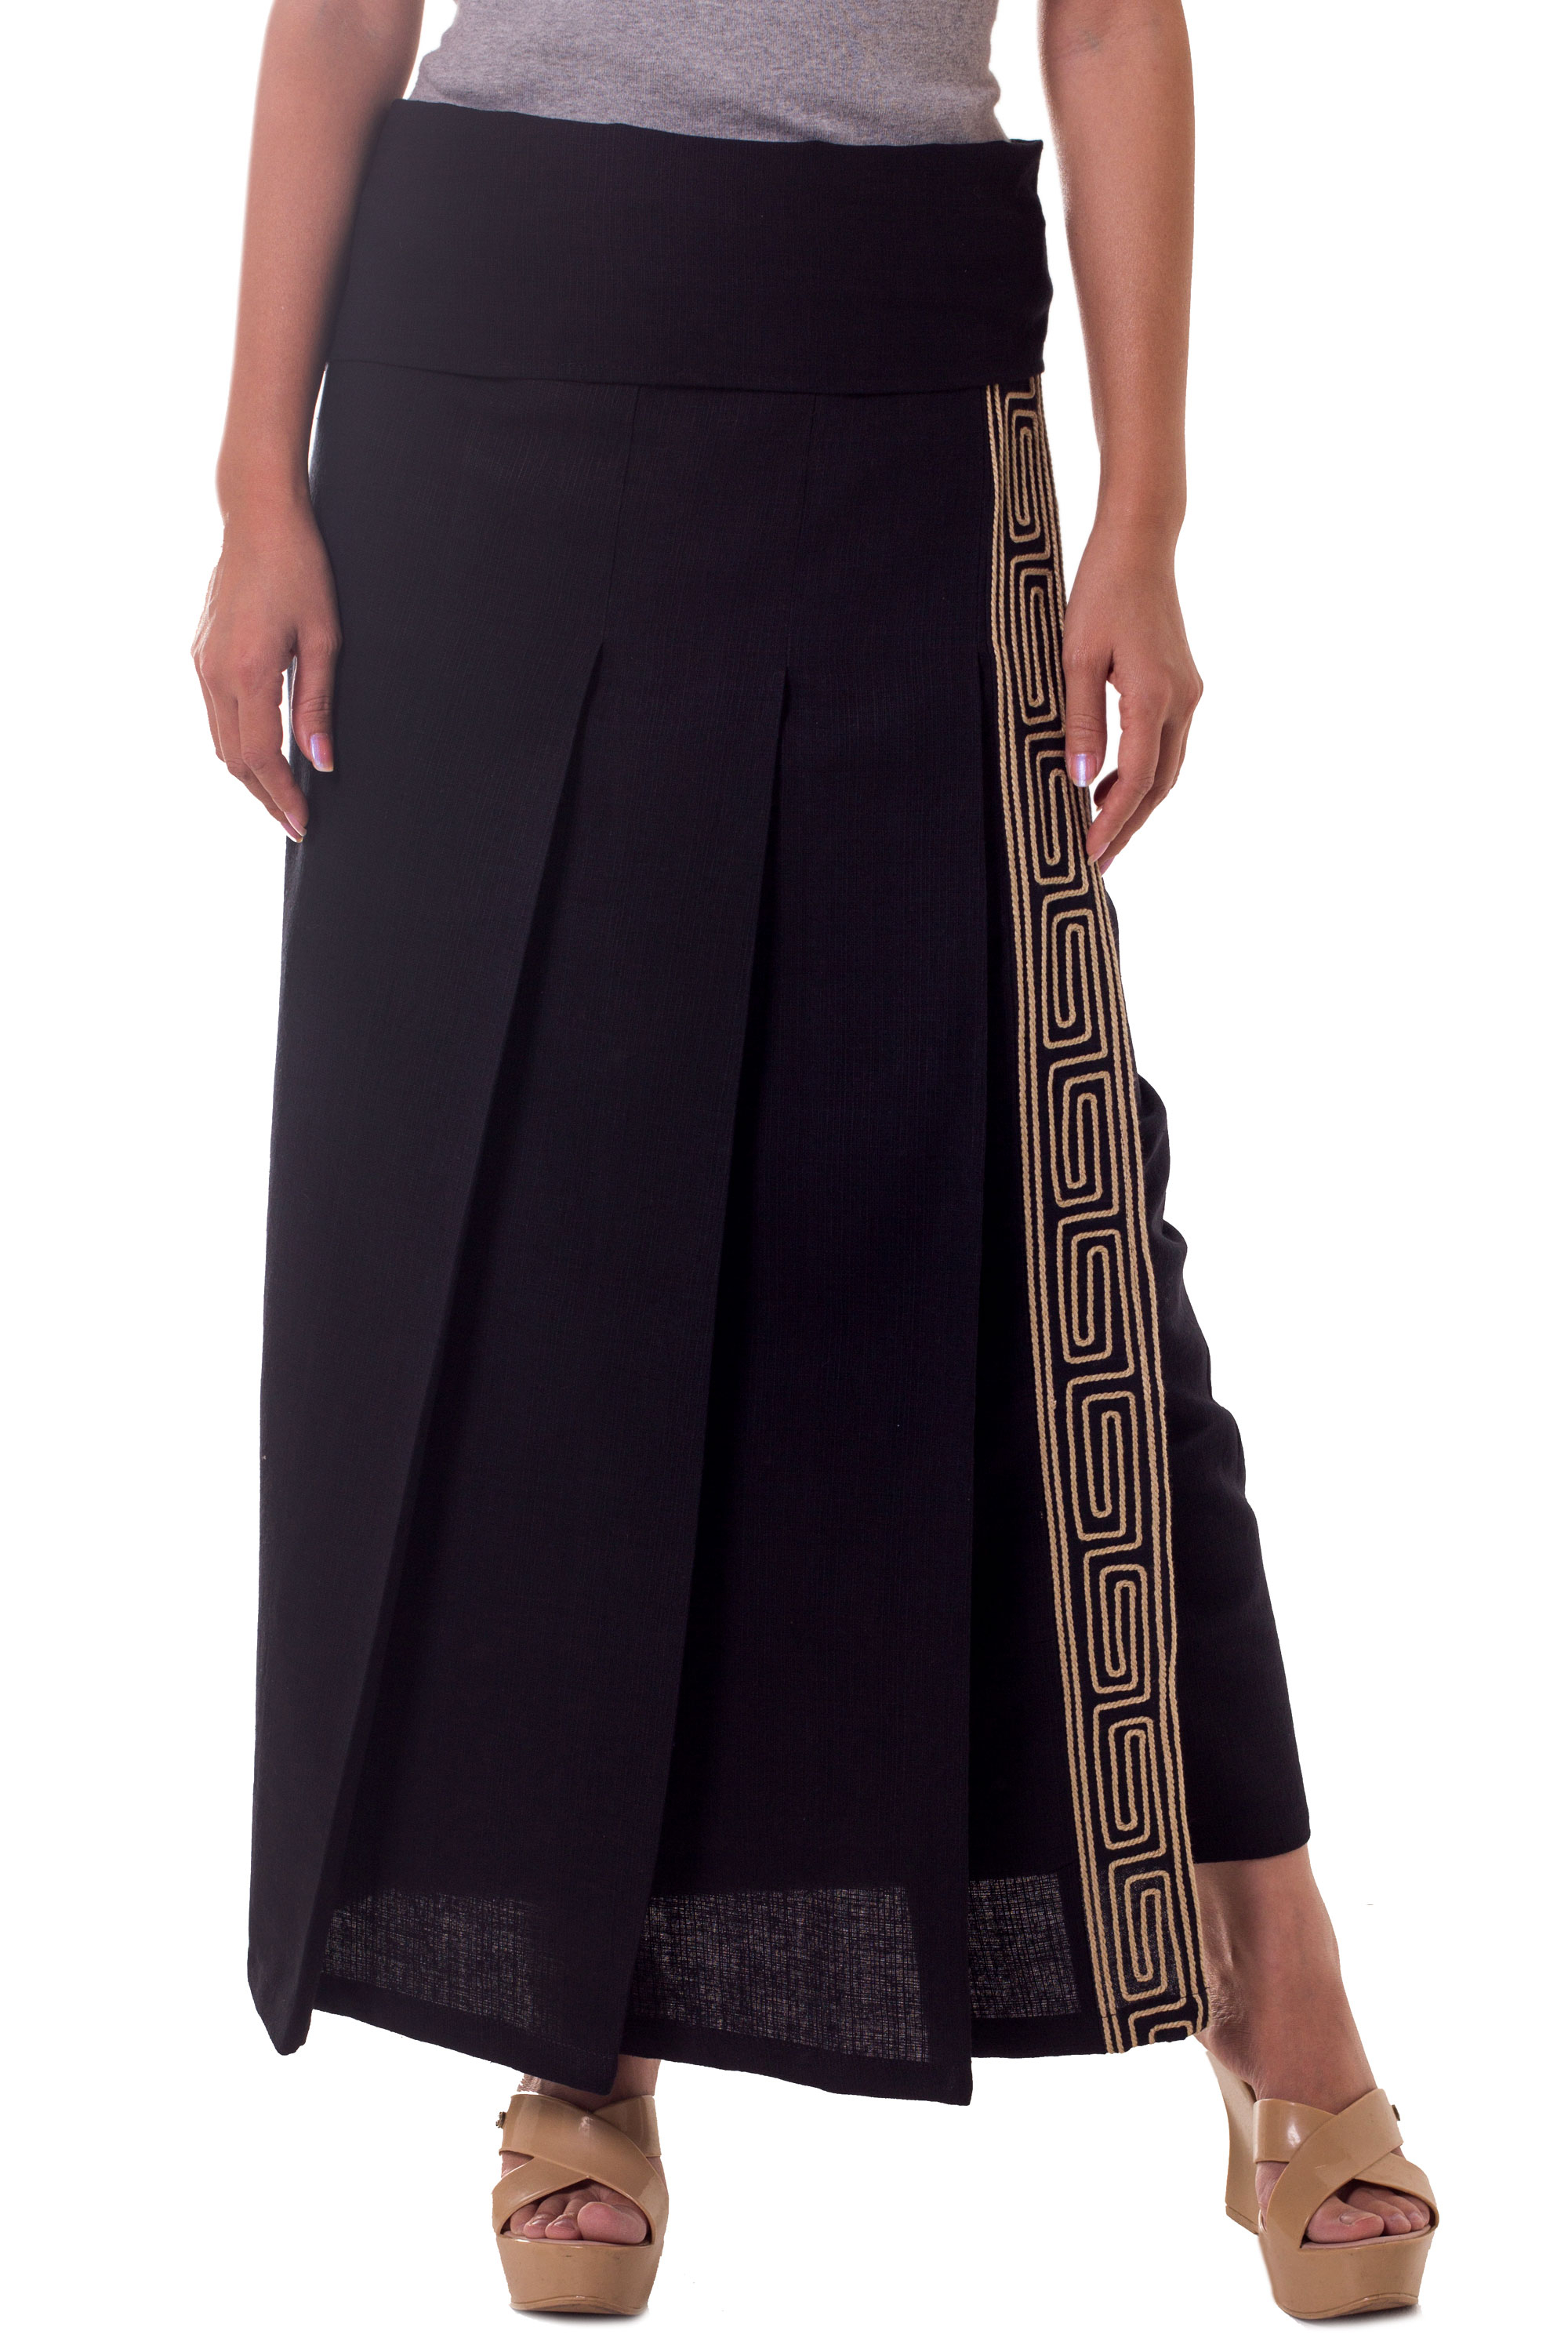 UNICEF Market | Black Cotton Wrap Skirt - Thai Deluxe